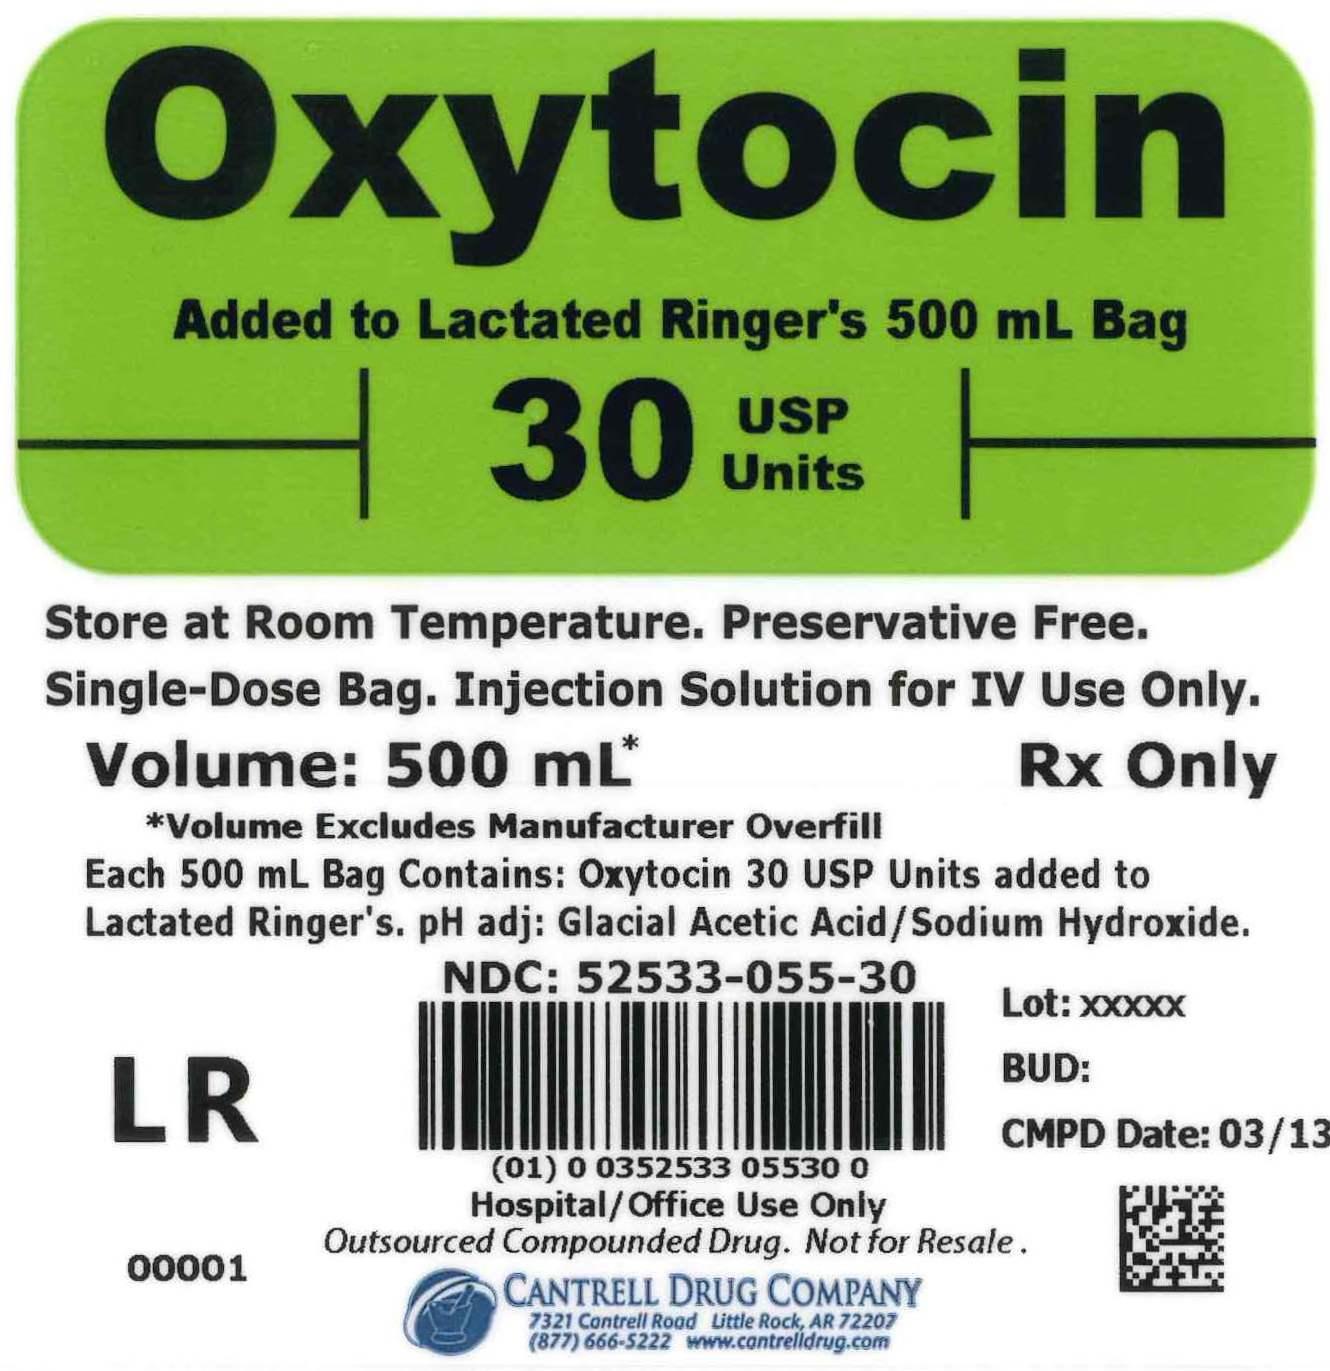 Oxytocin 30 USP Units Added to Lactated Ringer's 500 mL Bag